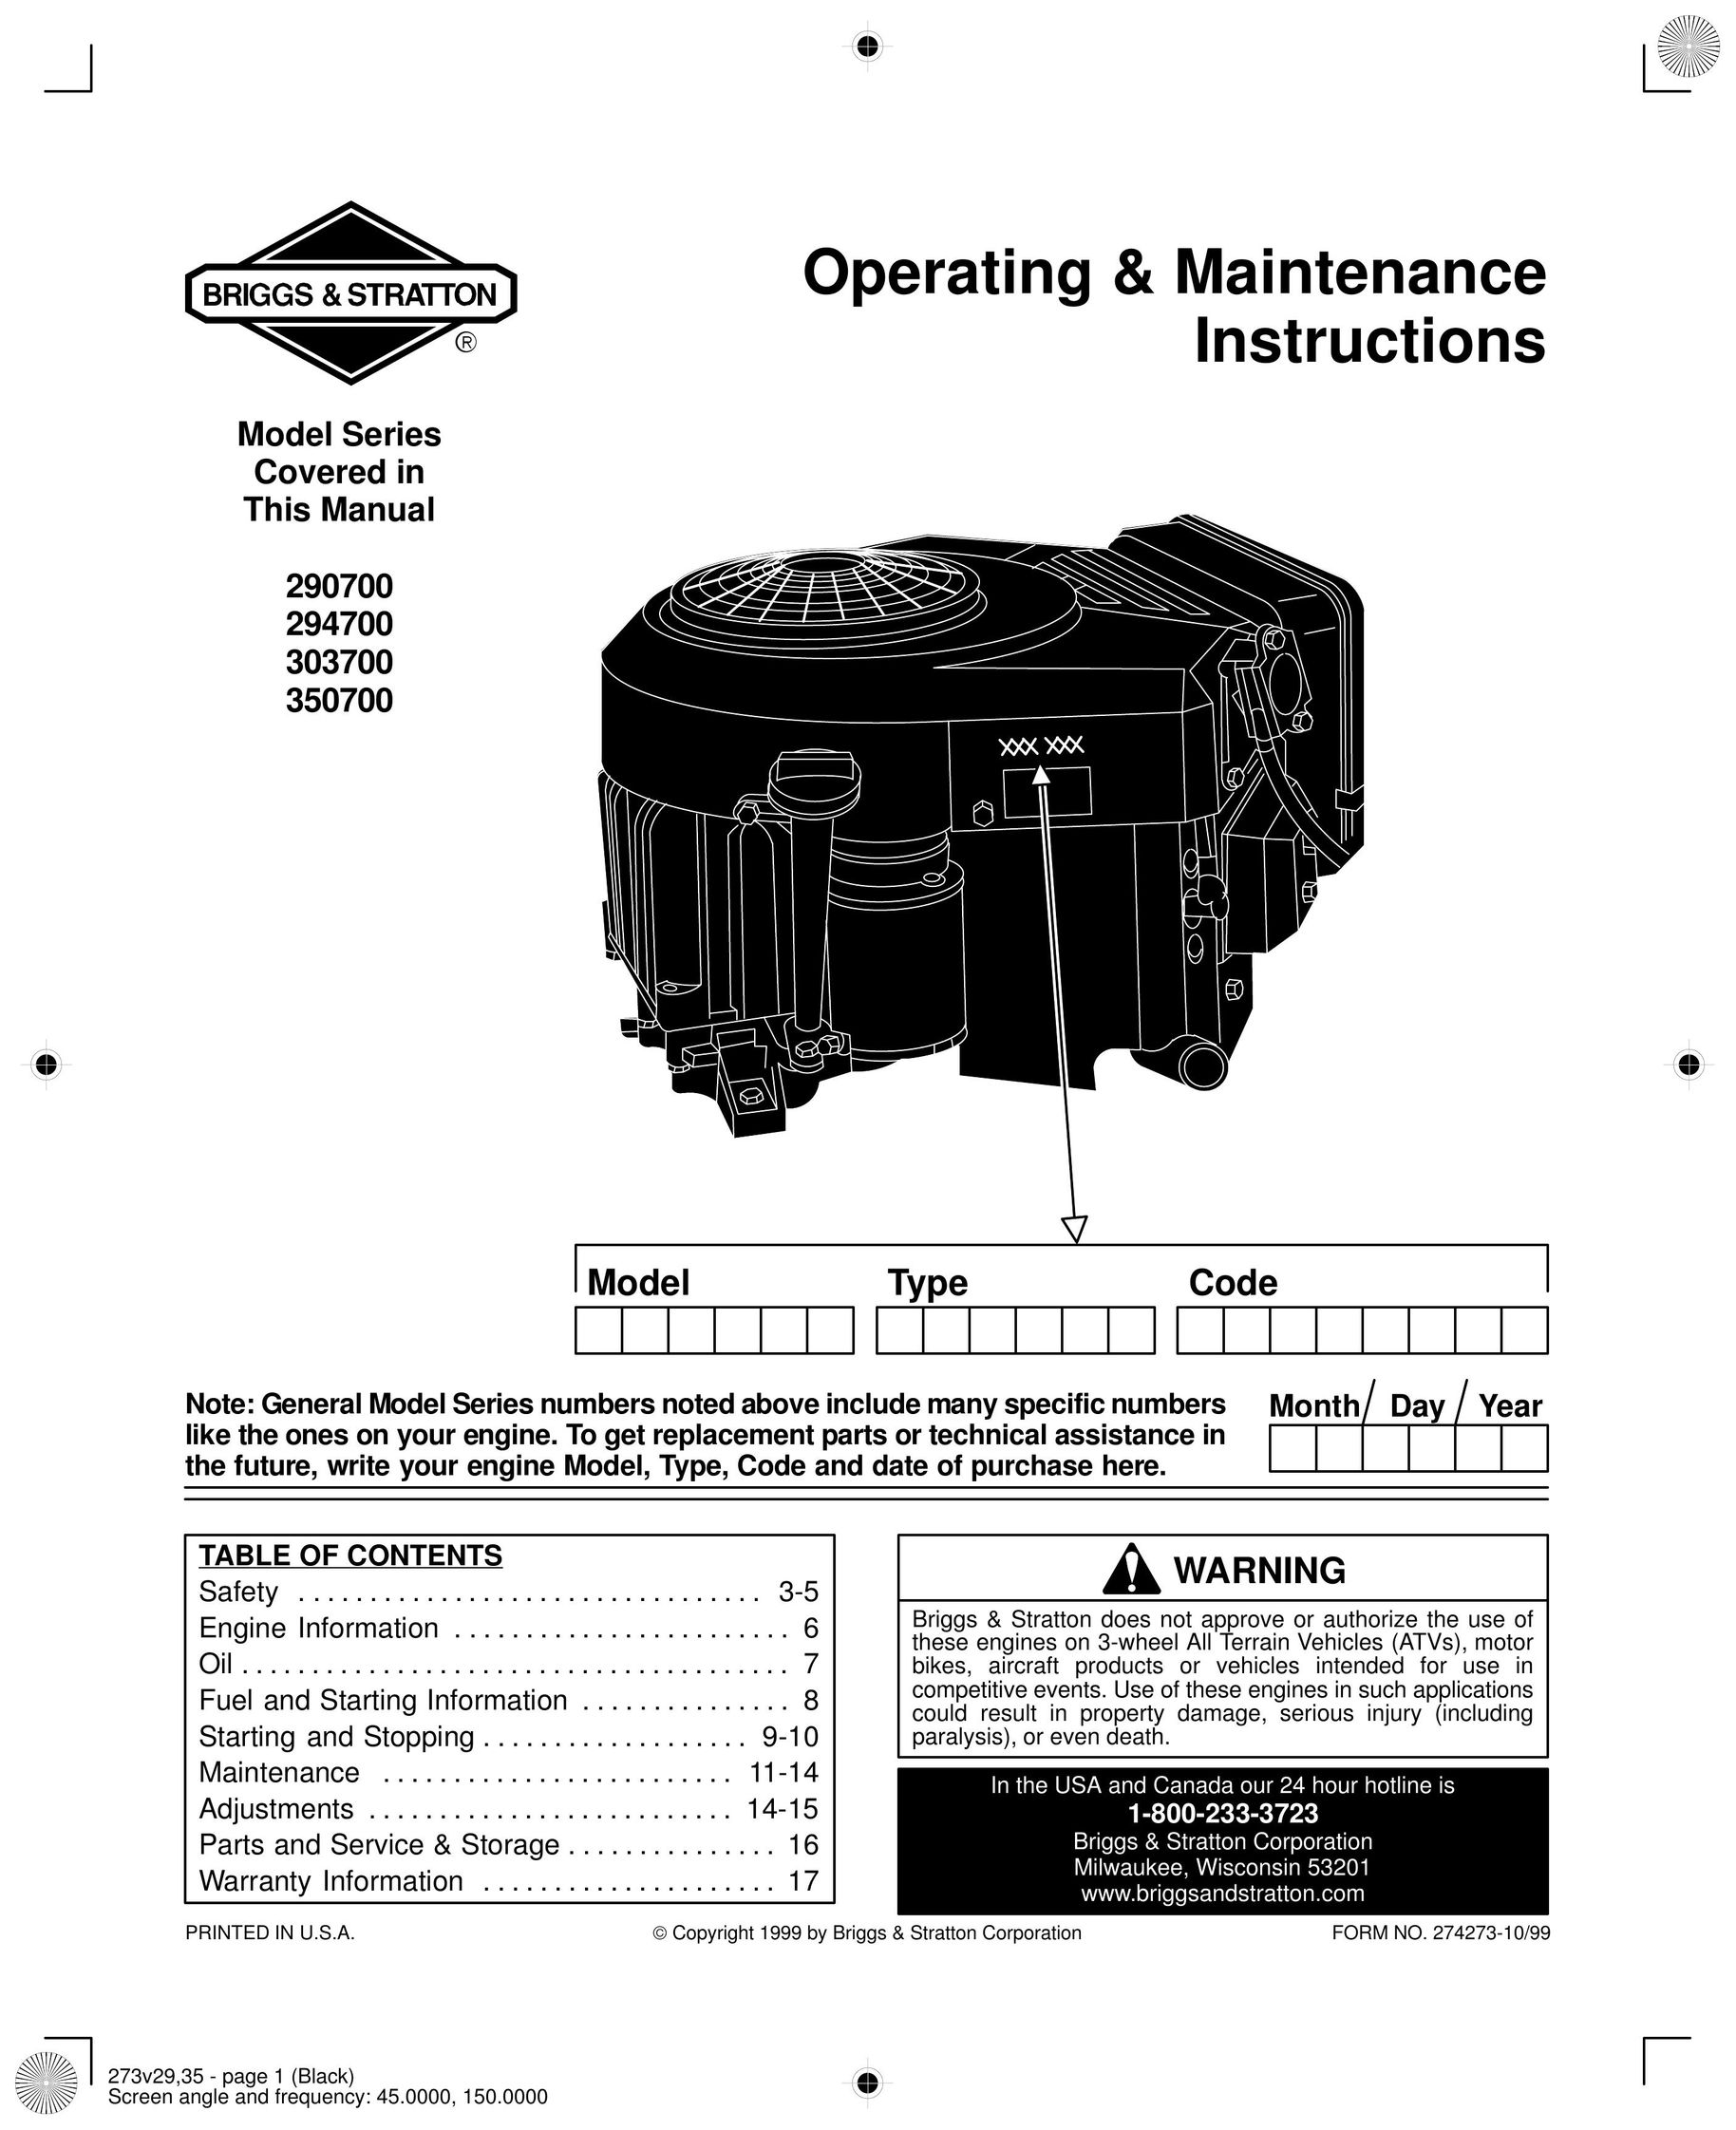 Briggs & Stratton 303700 Plumbing Product User Manual